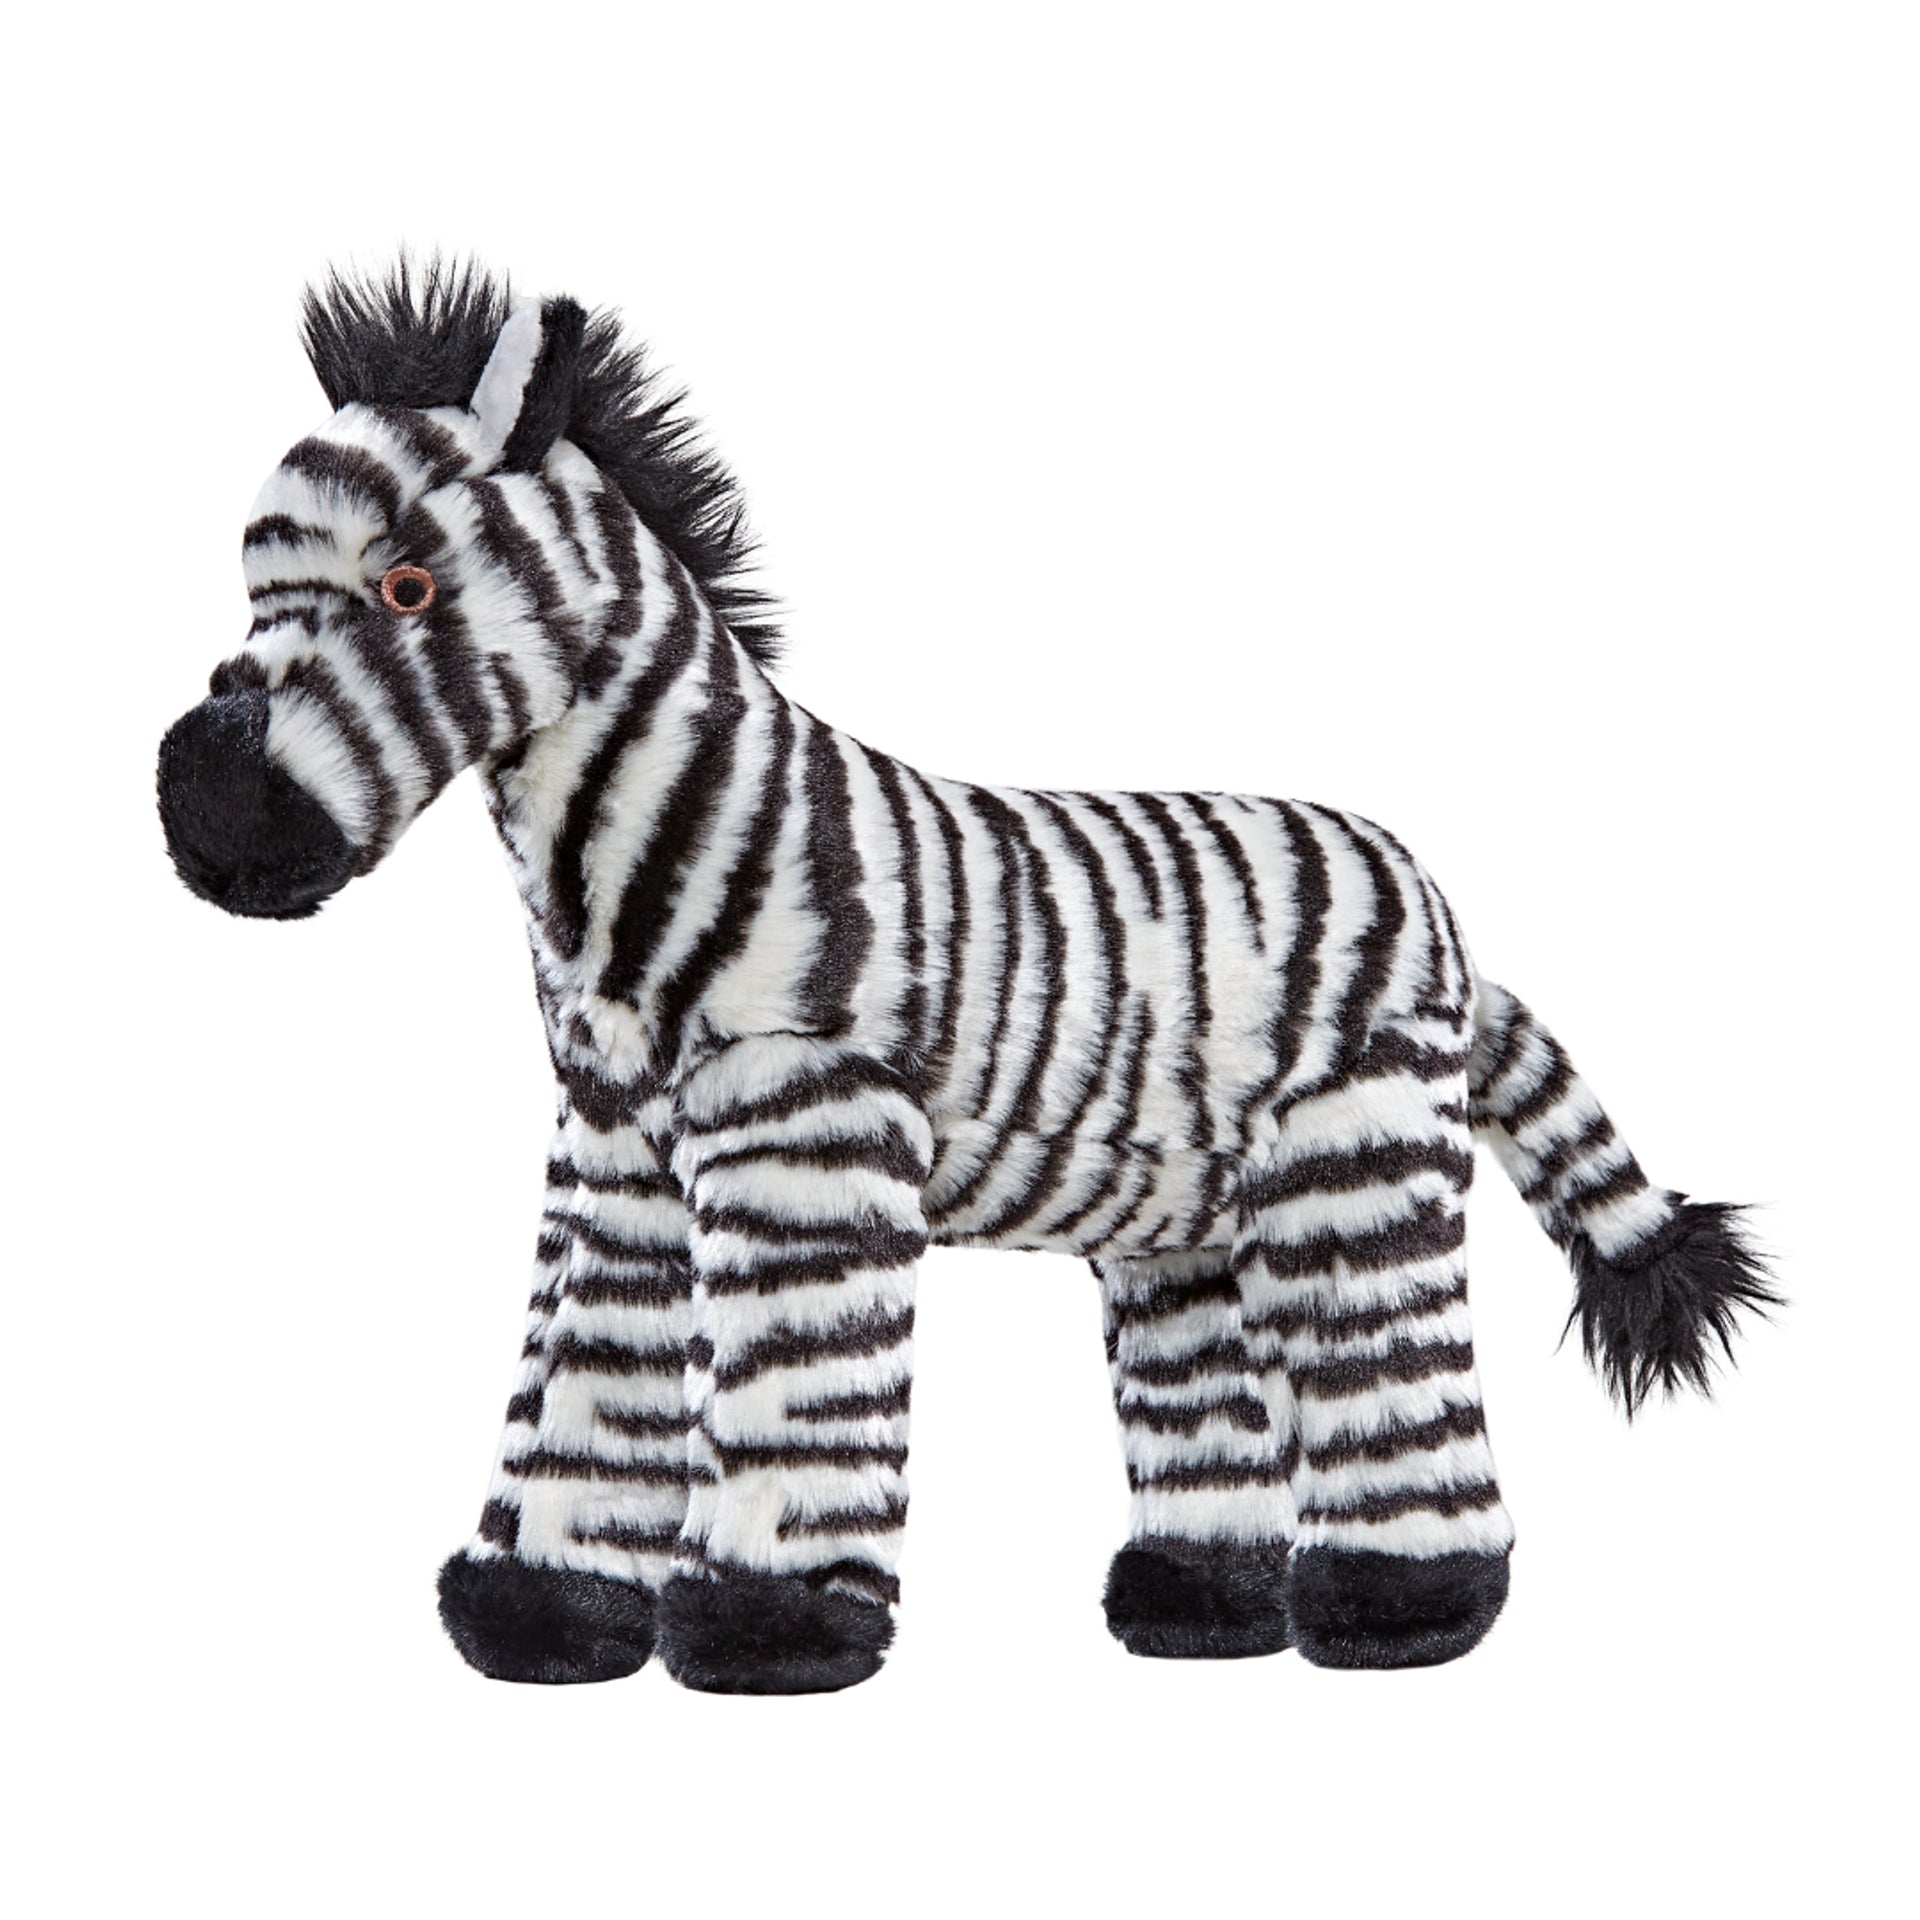 Bob the Zebra Plush Toy for Dogs